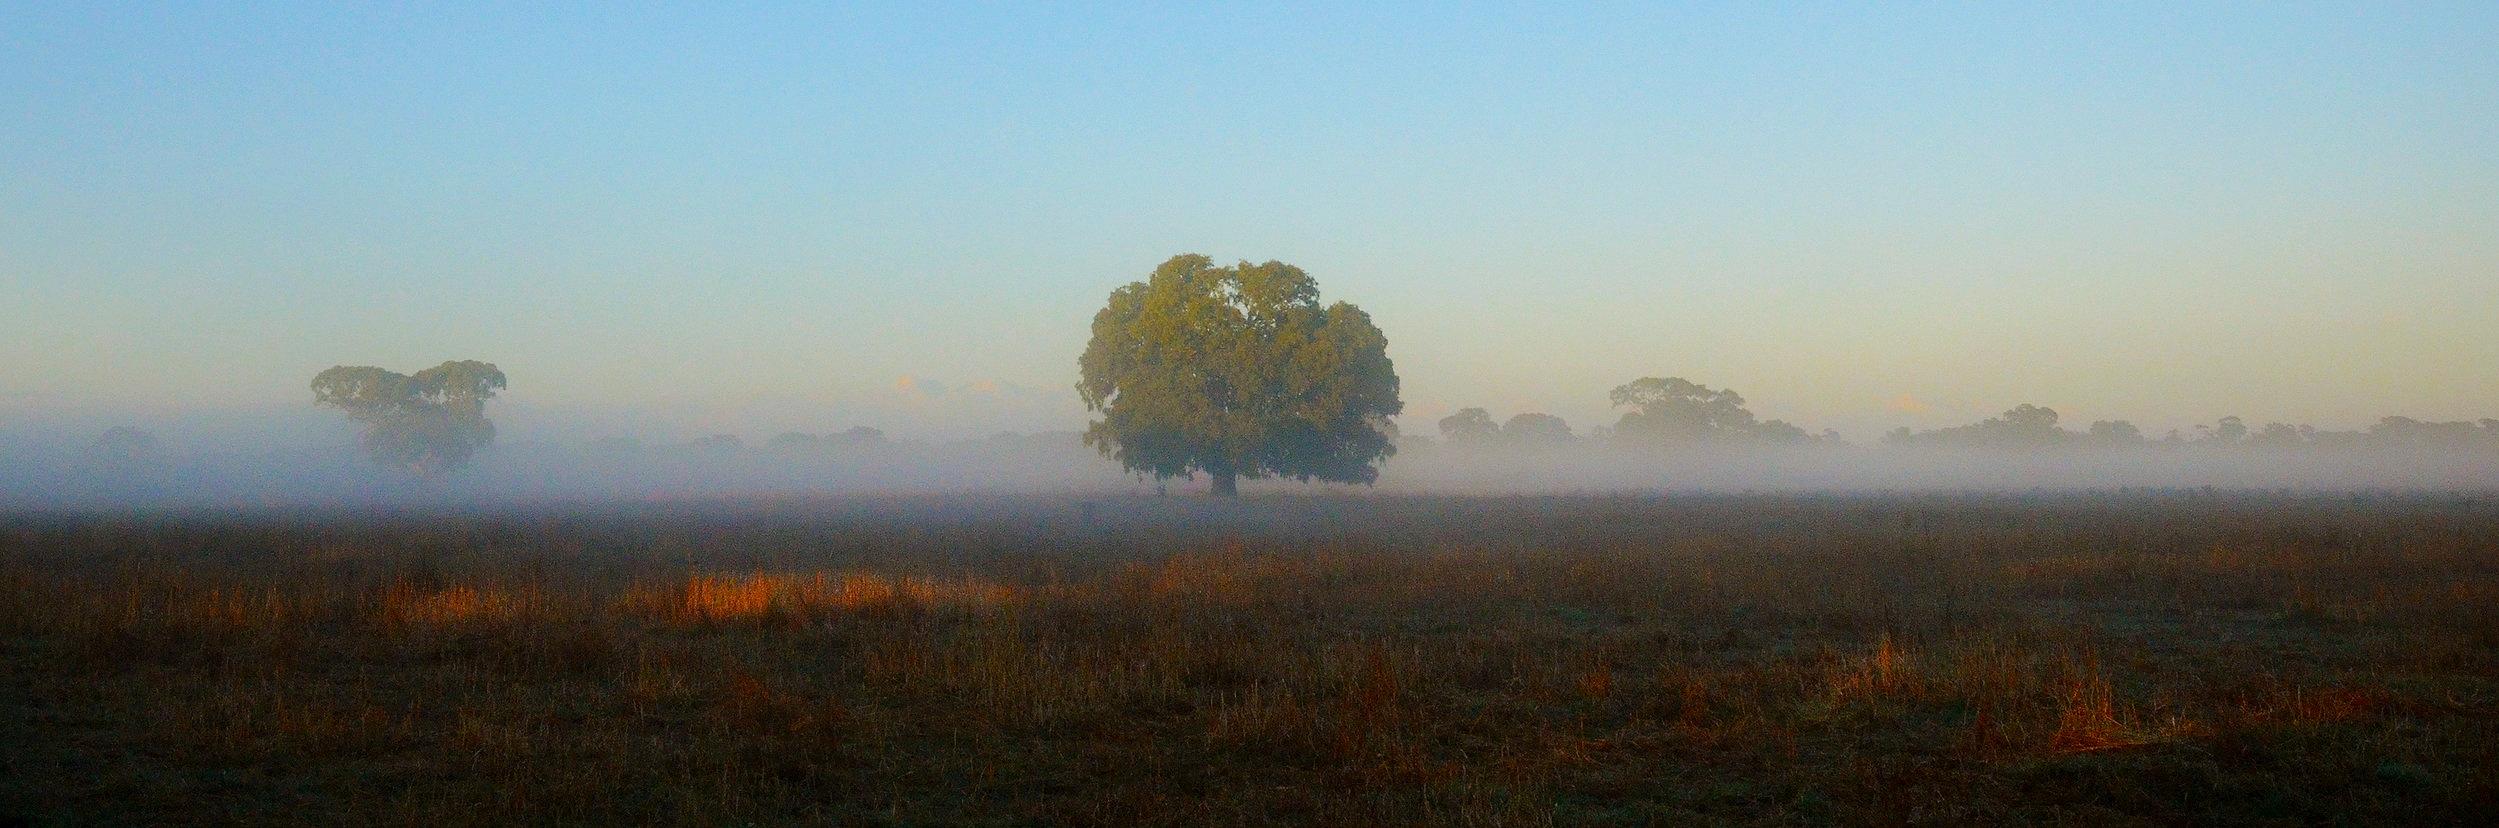  Morning fog -2016 